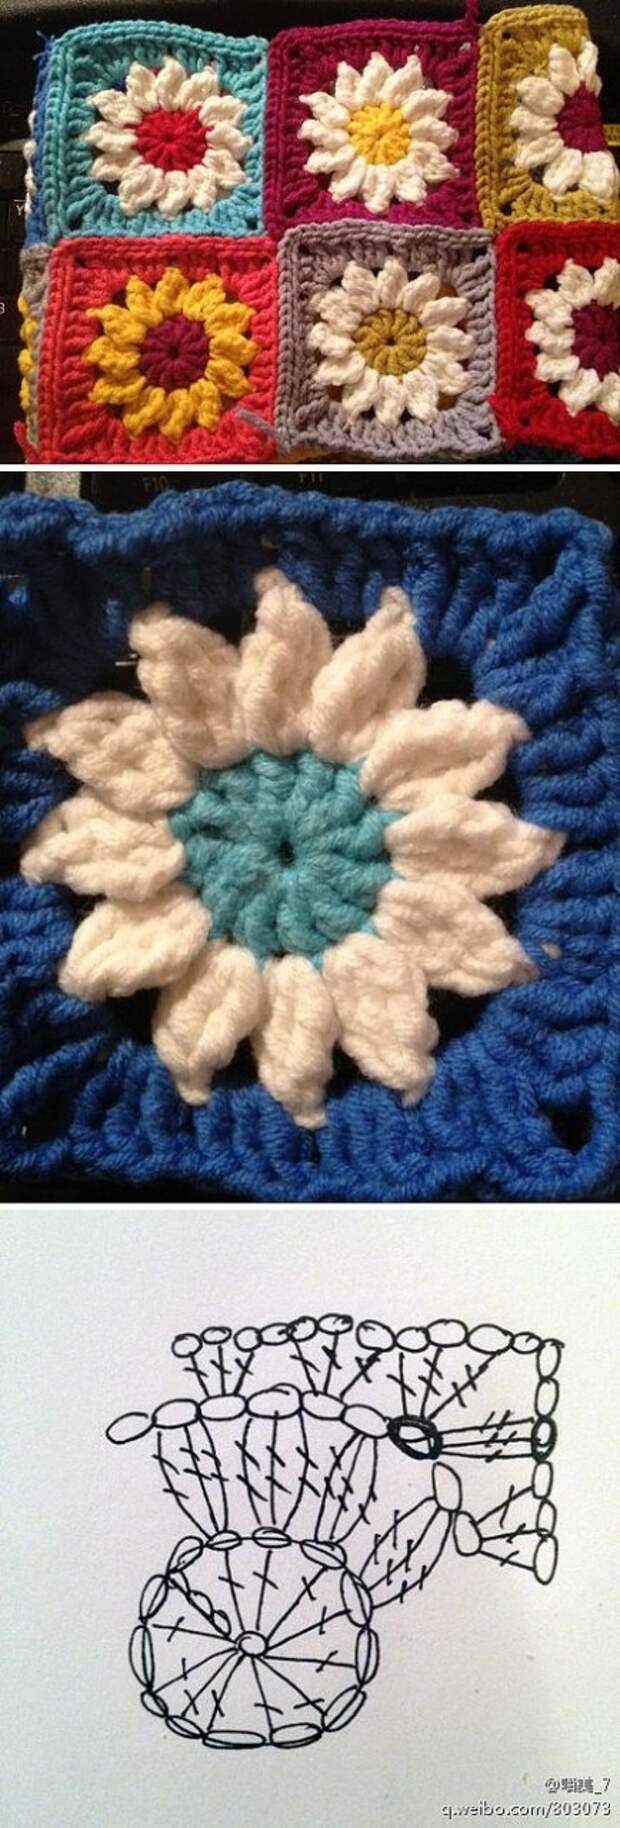 Crochet Granny Squares - Chart: 